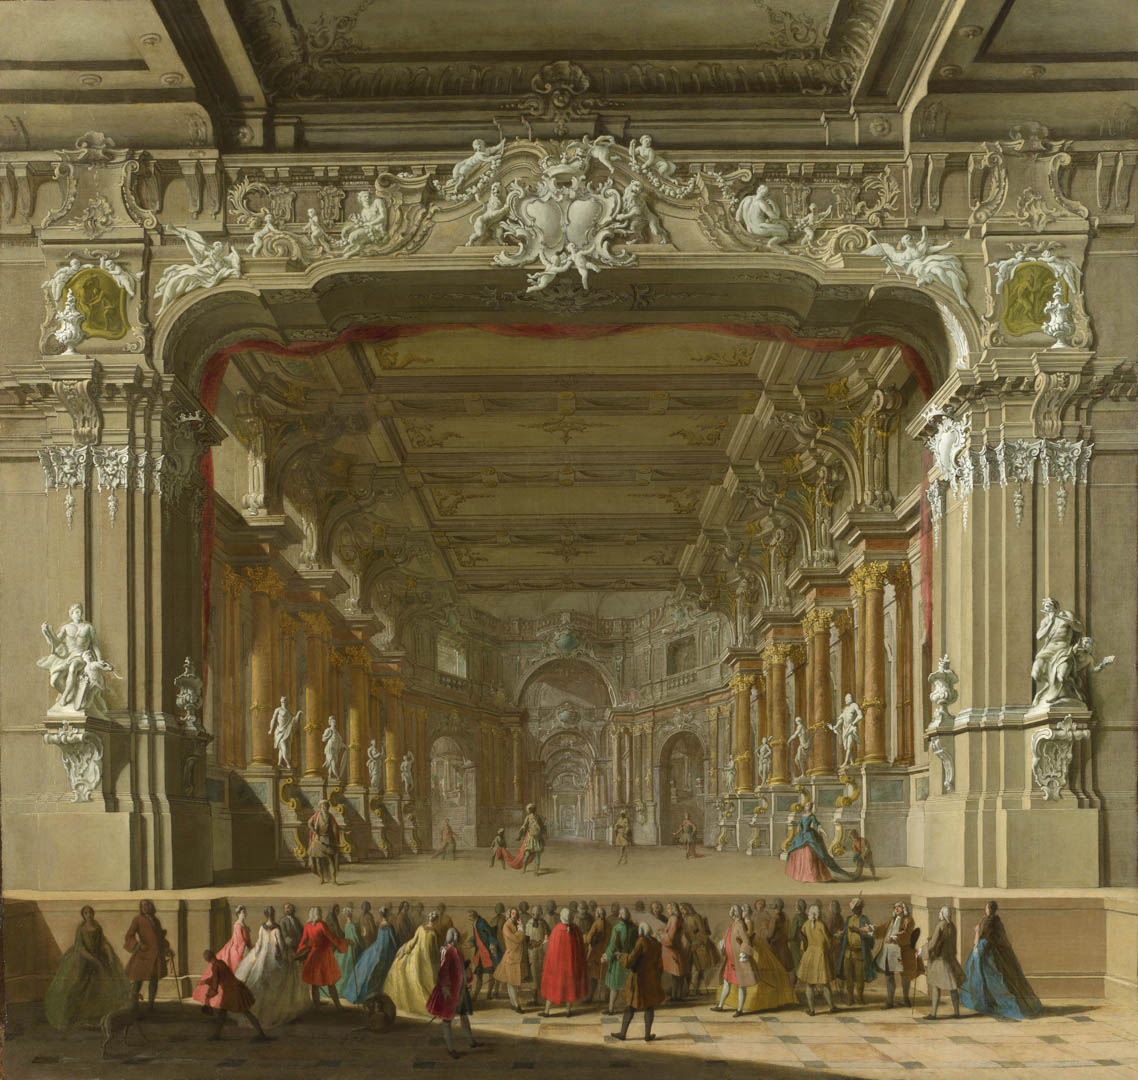  Of A Theatre   A italian renaissance northern art wallpaper picture 1138x1080